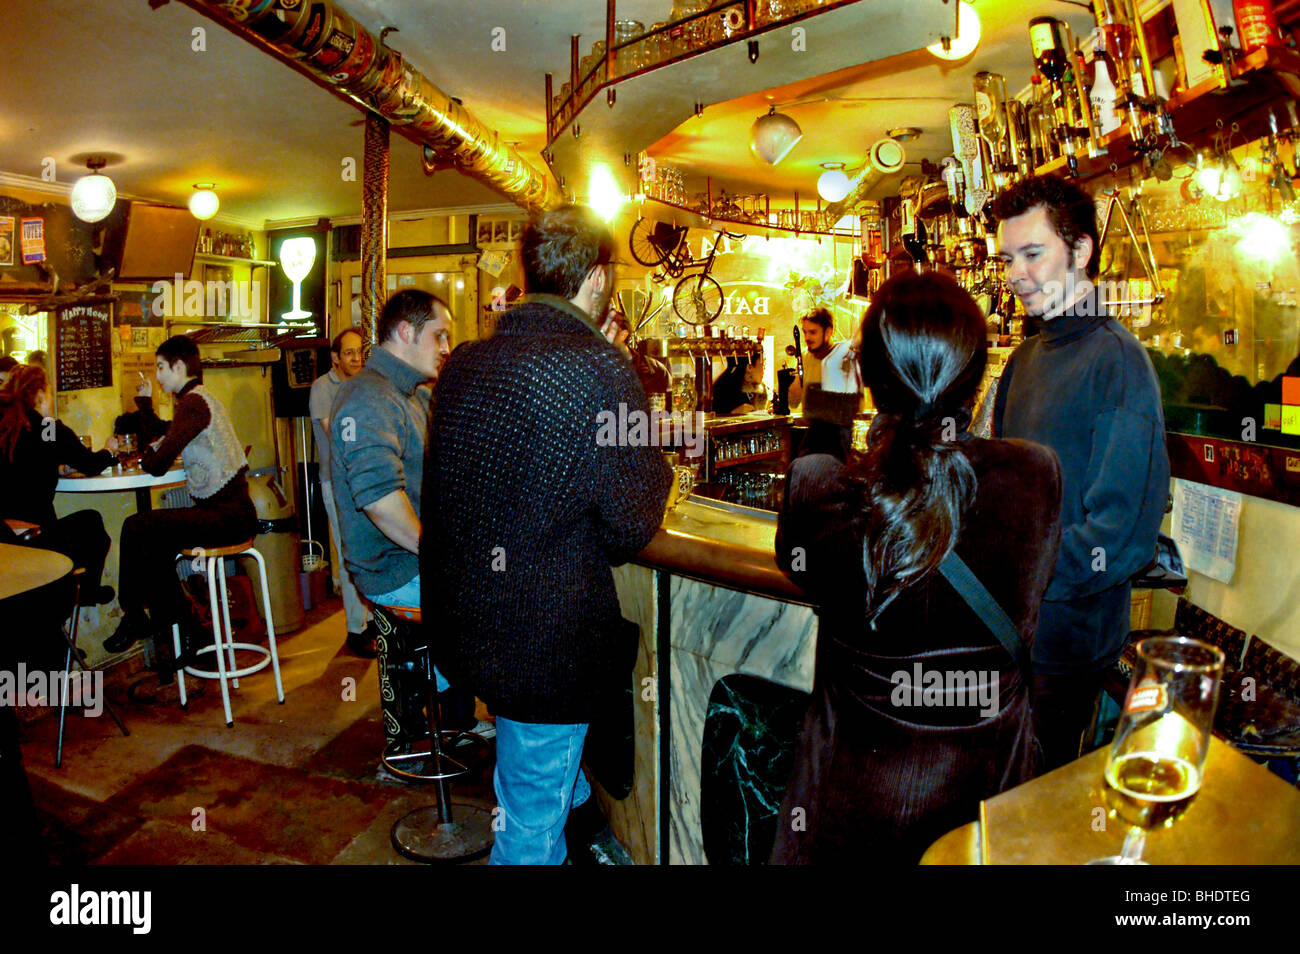 PARIS, France - Young Adults in Students' Bar Café "Le Pantalon", Pub  Sharing Drinks, inside busy pub local neighborhood bar interior Stock Photo  - Alamy